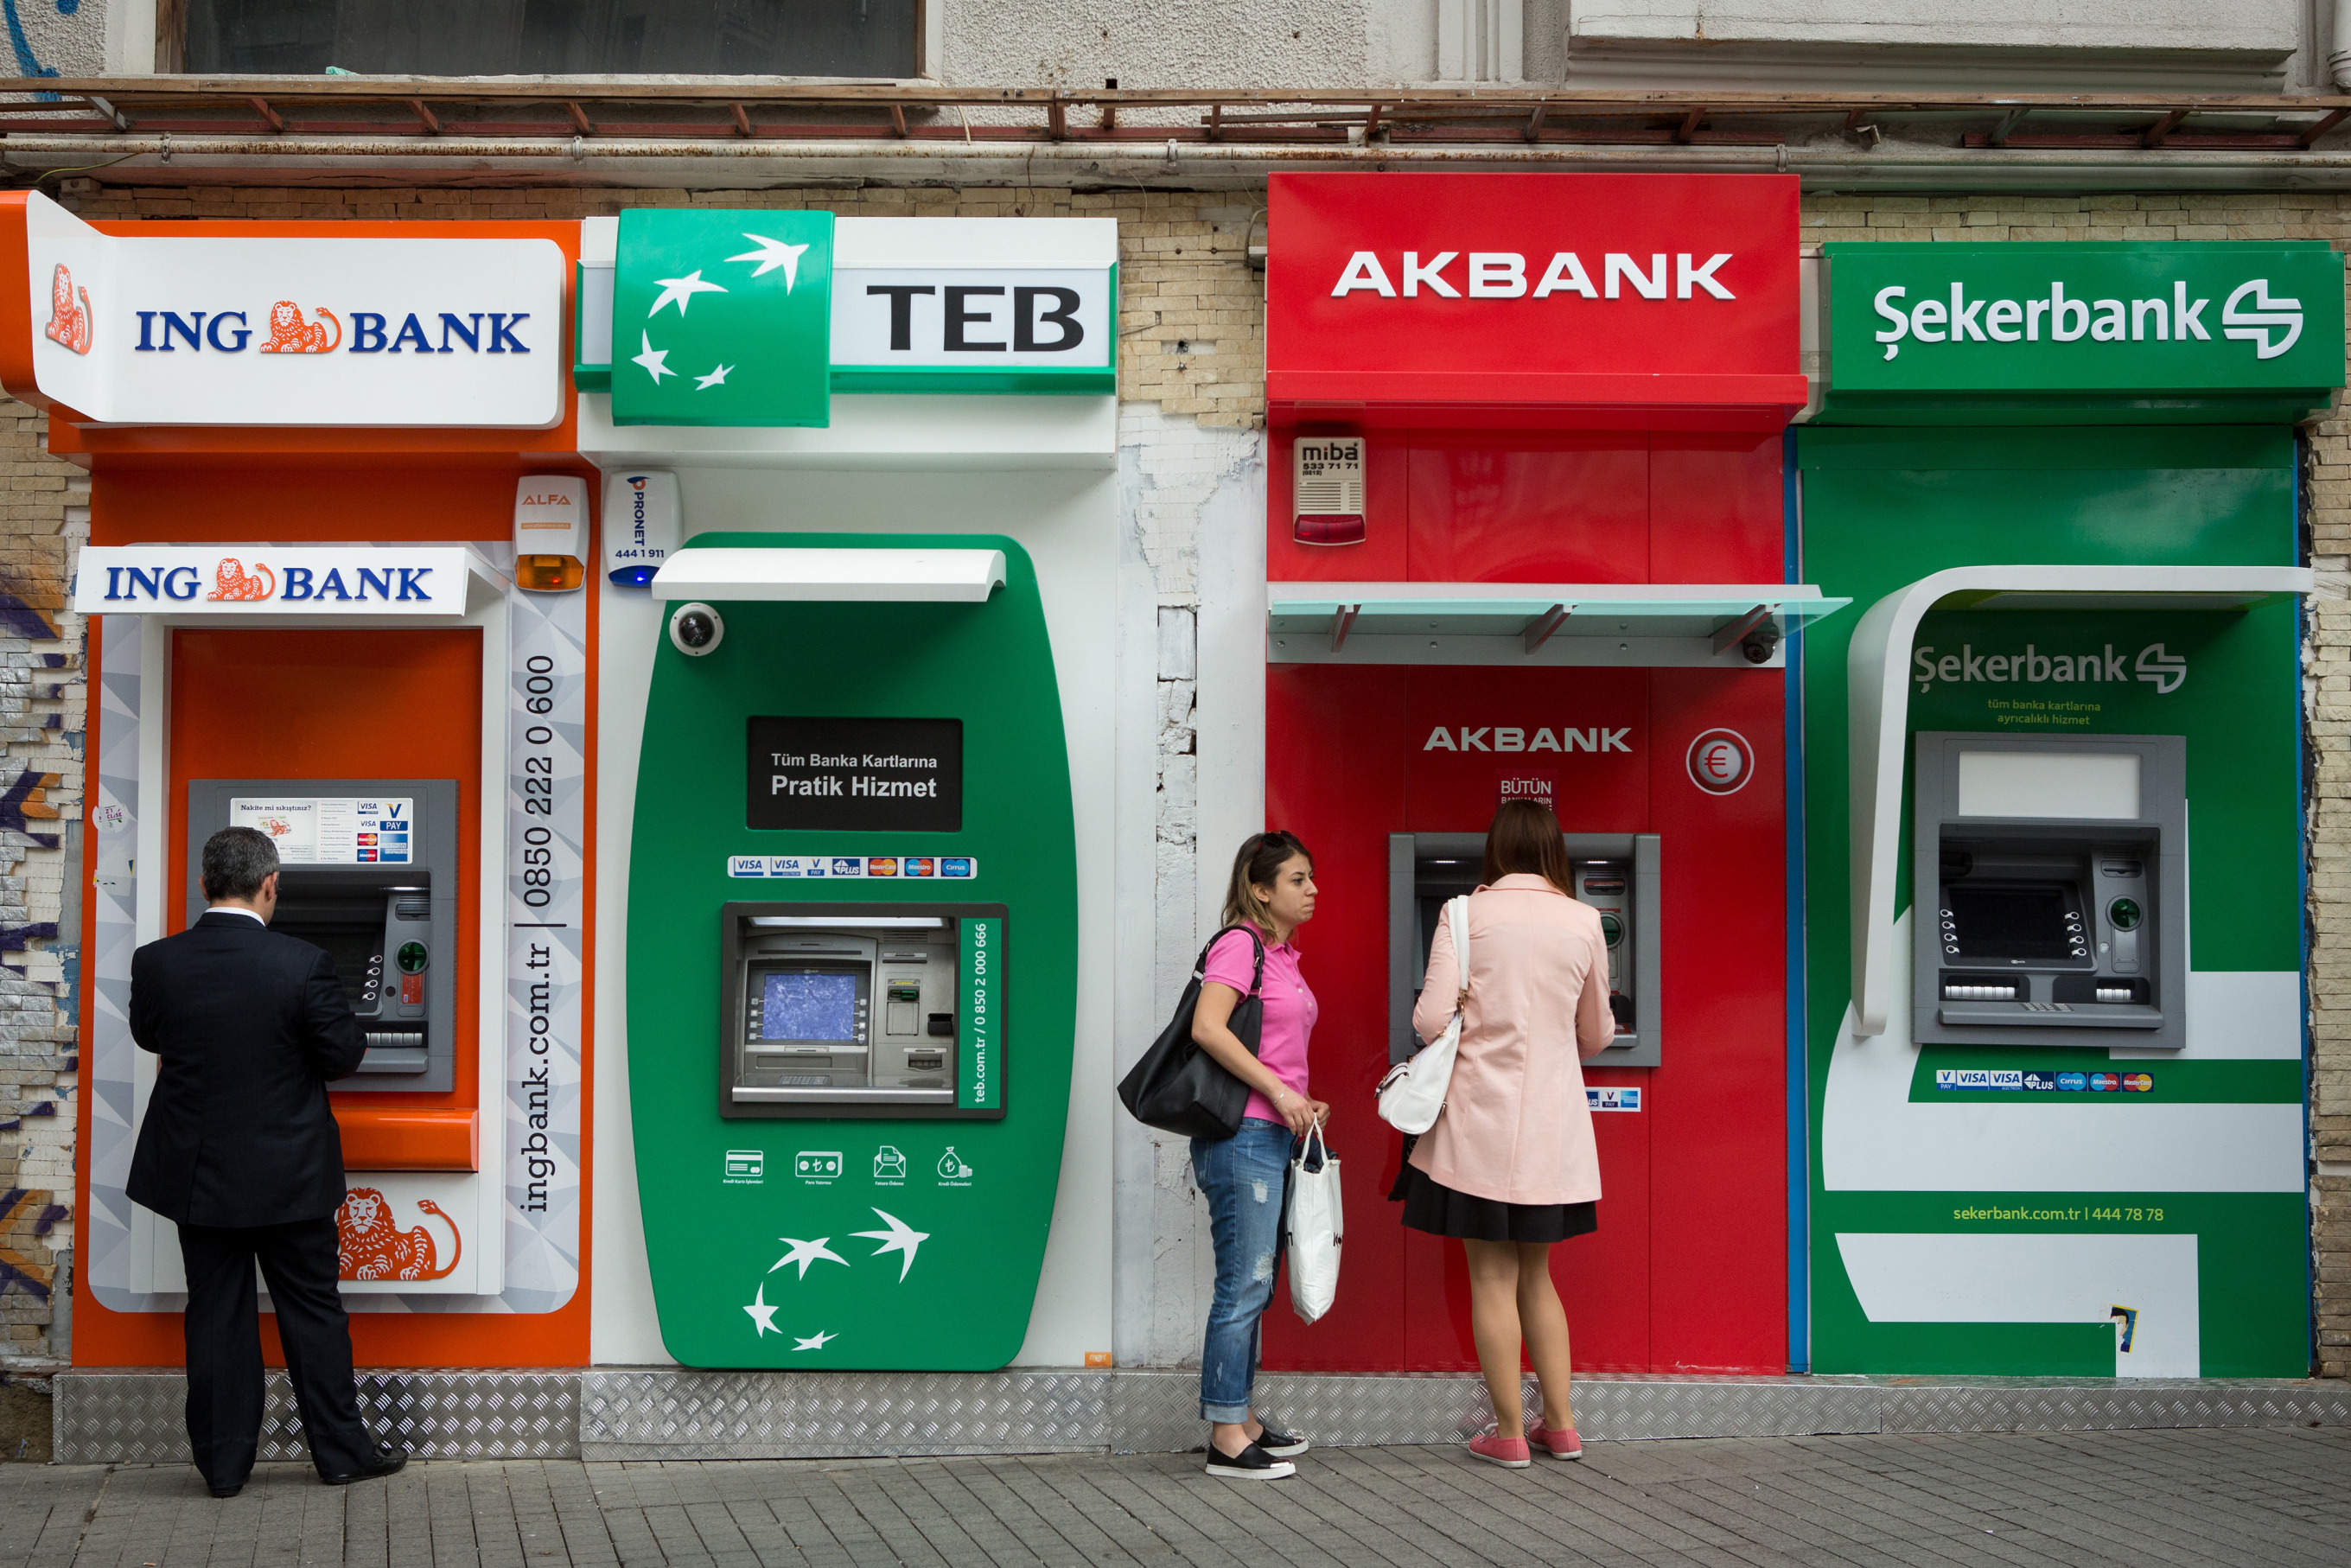 Турецко российский банк. Банкомат (ATM). Банк Турции. Банкоматы в Турции. Зираат банк Турция банкоматы.